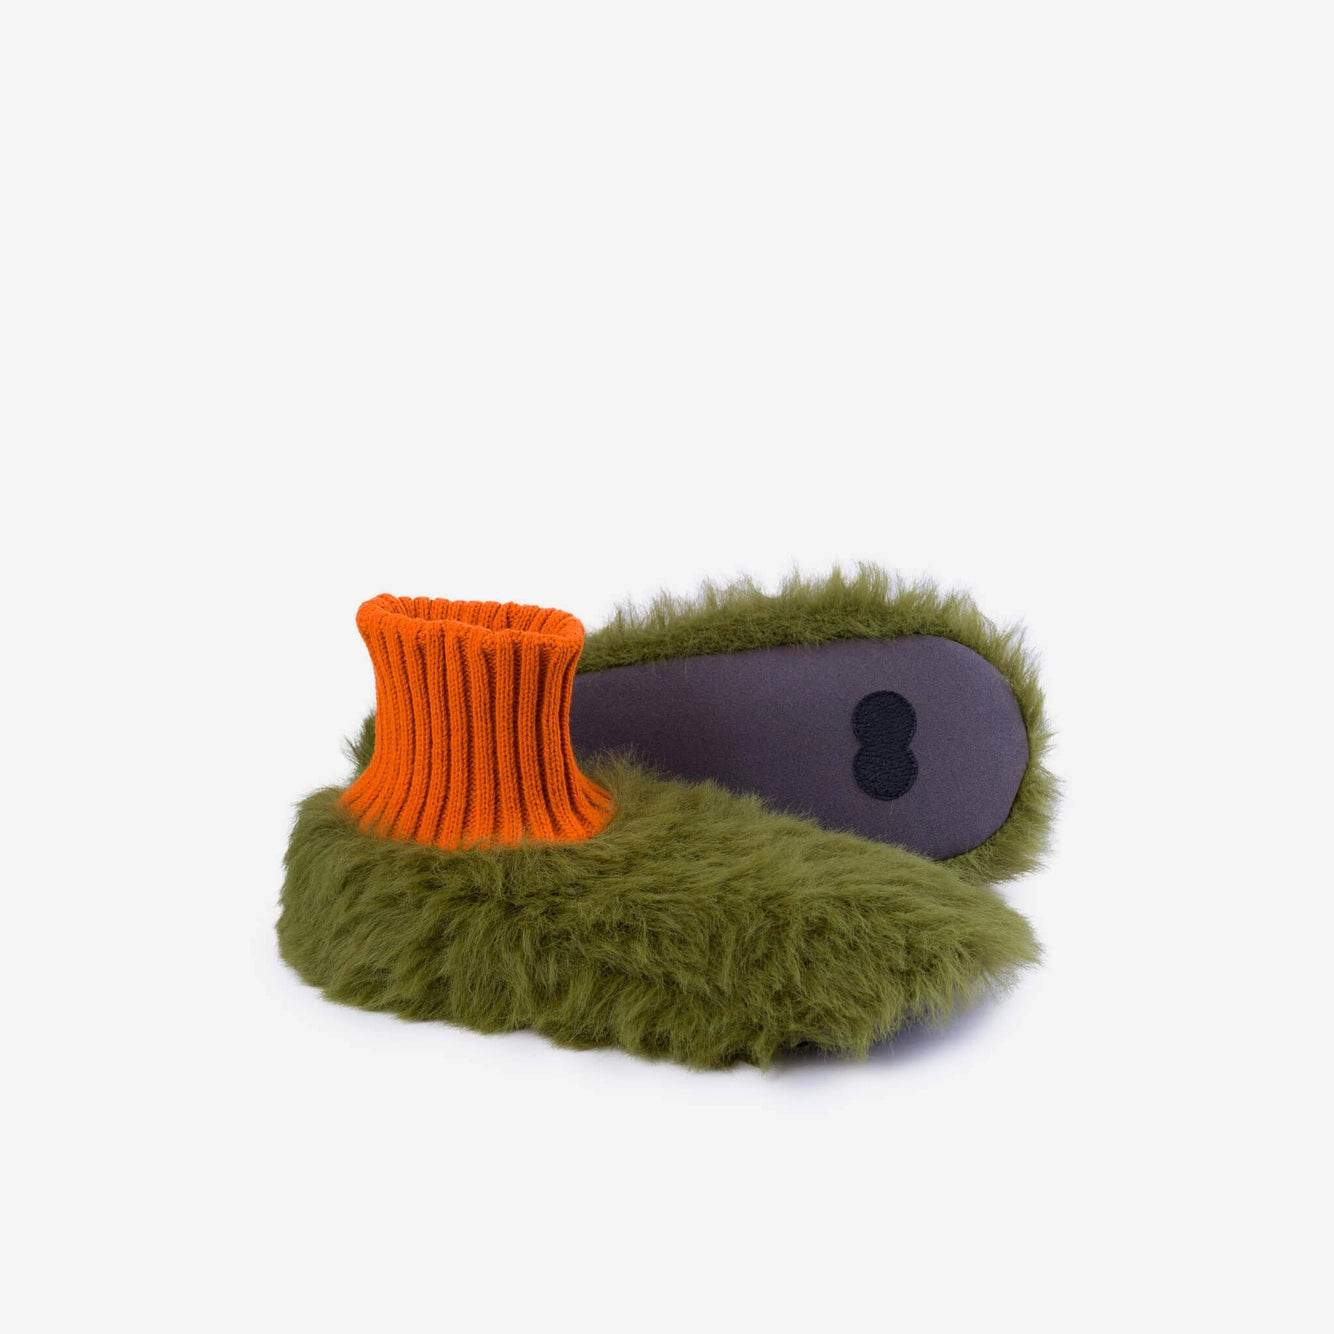 Moss Furry Sock Slippers